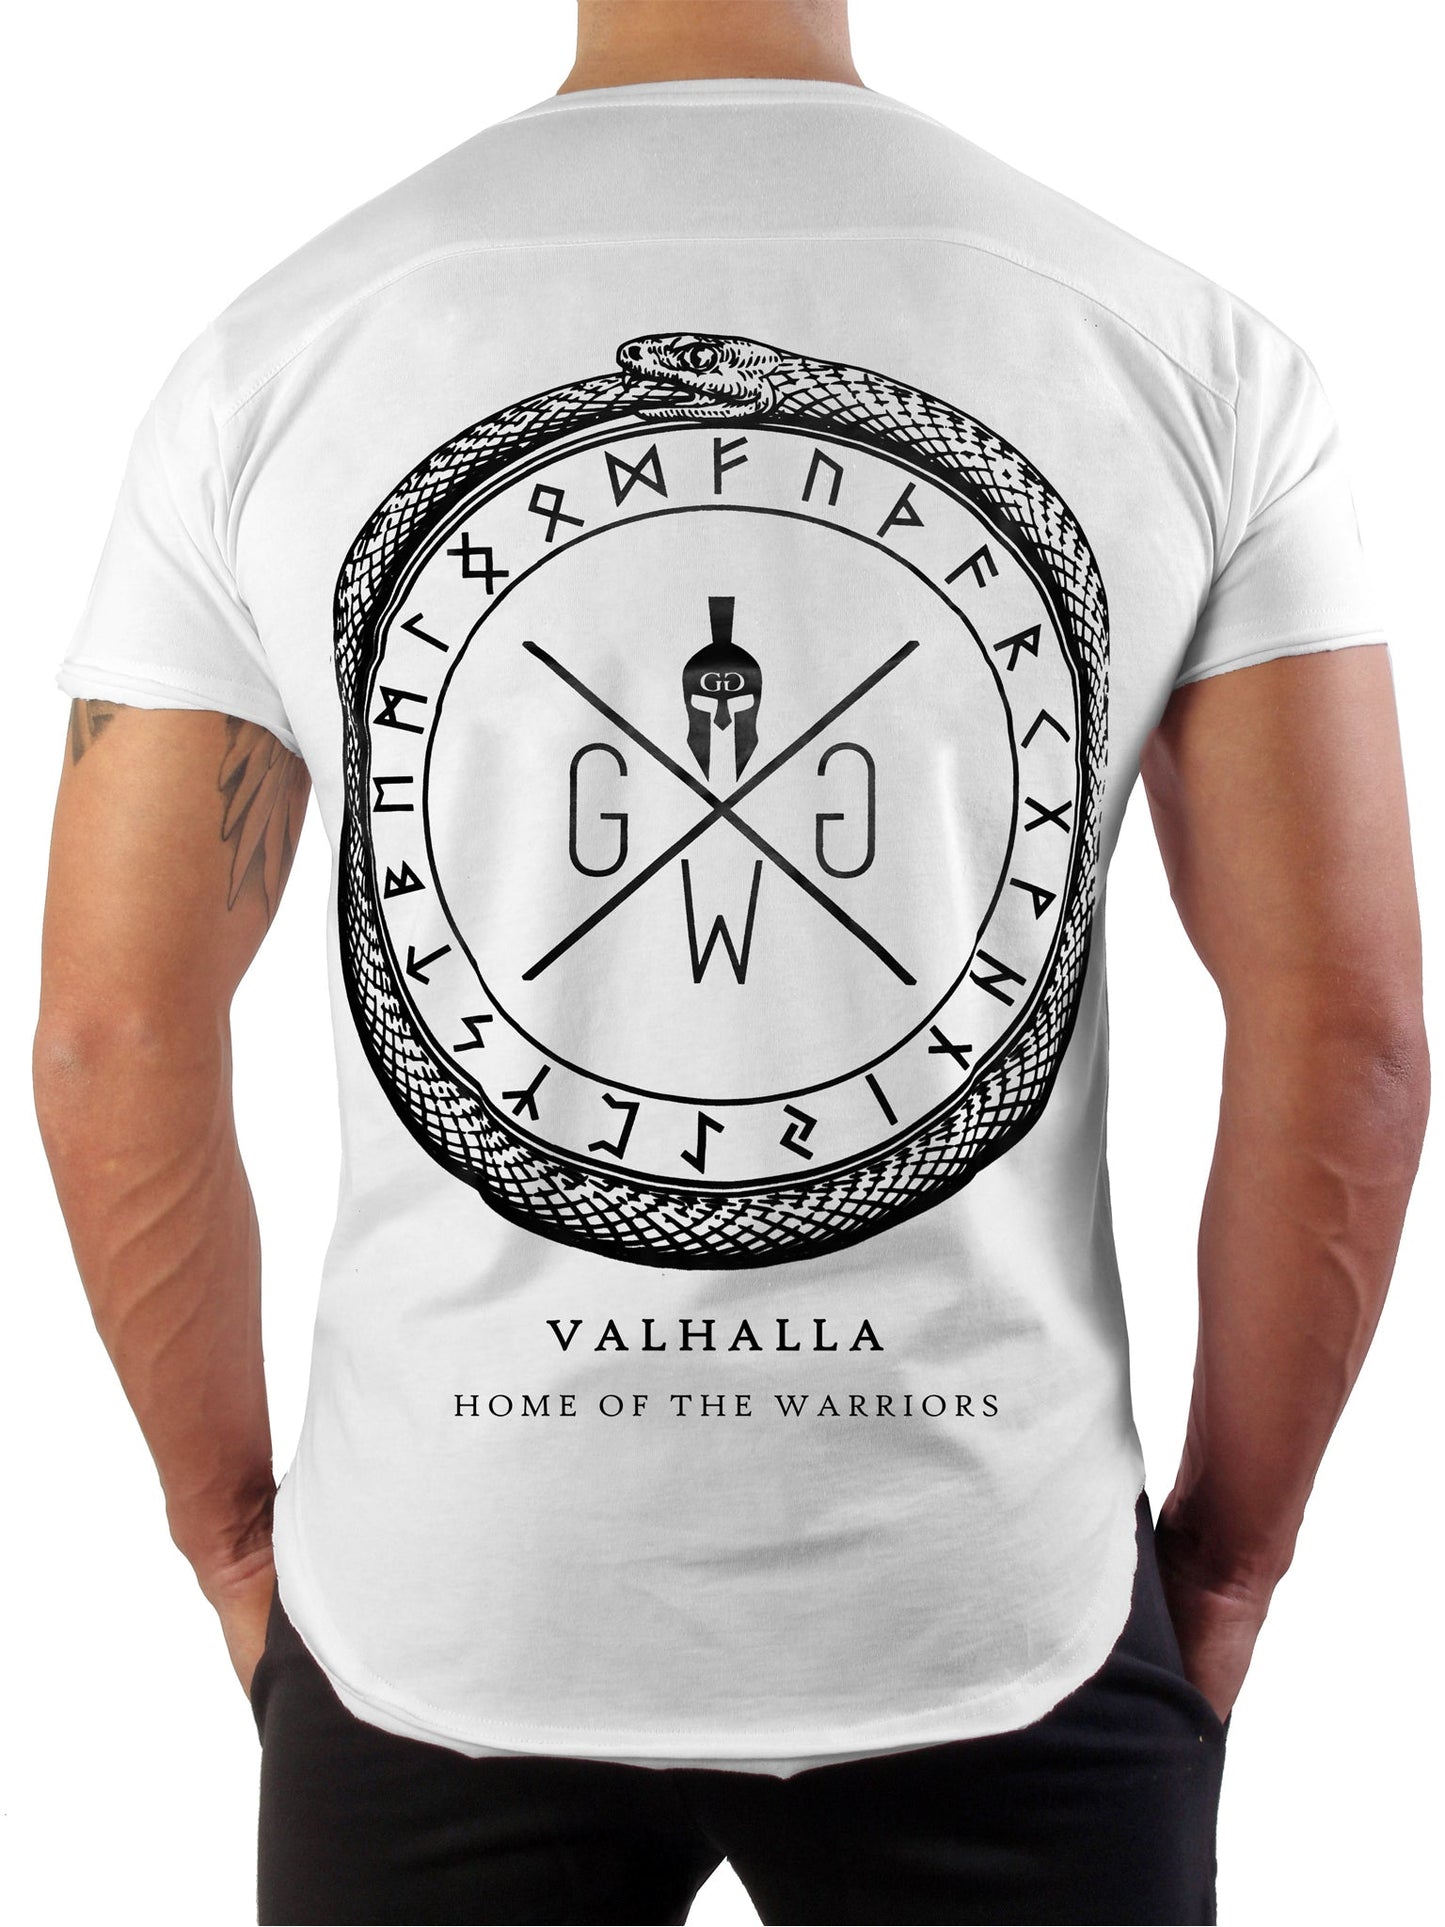 Valhalla T-Shirt - Weiss - Gym Generation®-7640171167077-www.gymgeneration.ch